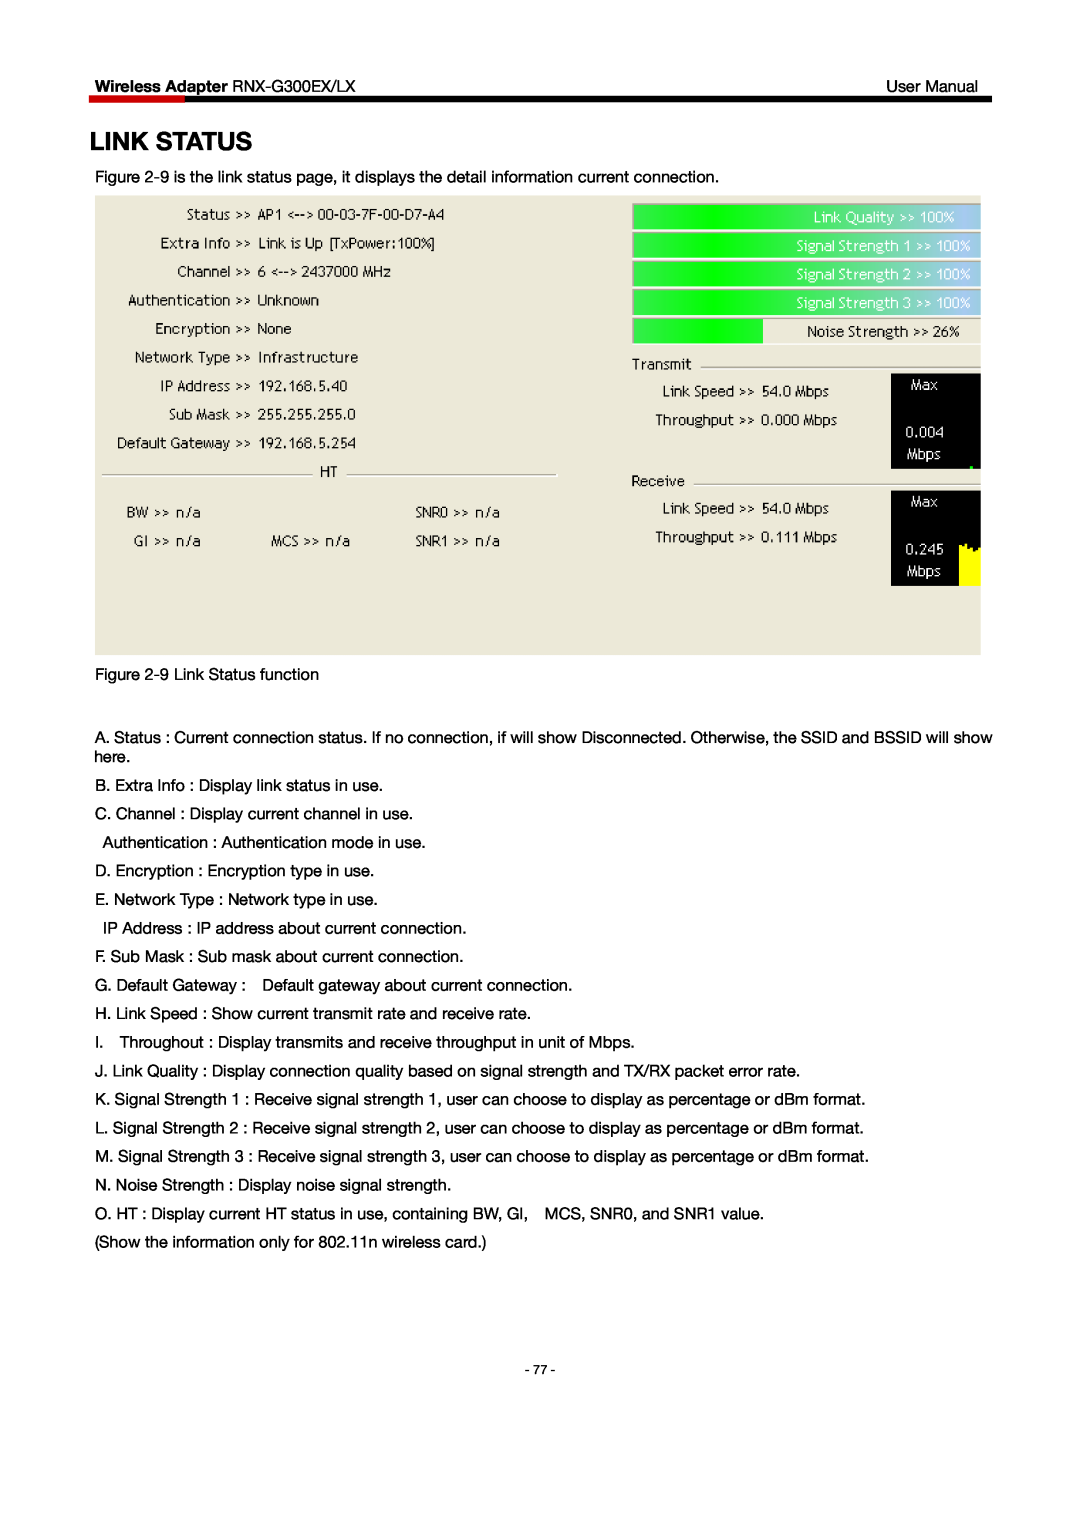 Rosewill RNX-G300EXLX user manual Link Status, Wireless Adapter RNX-G300EX/LX 